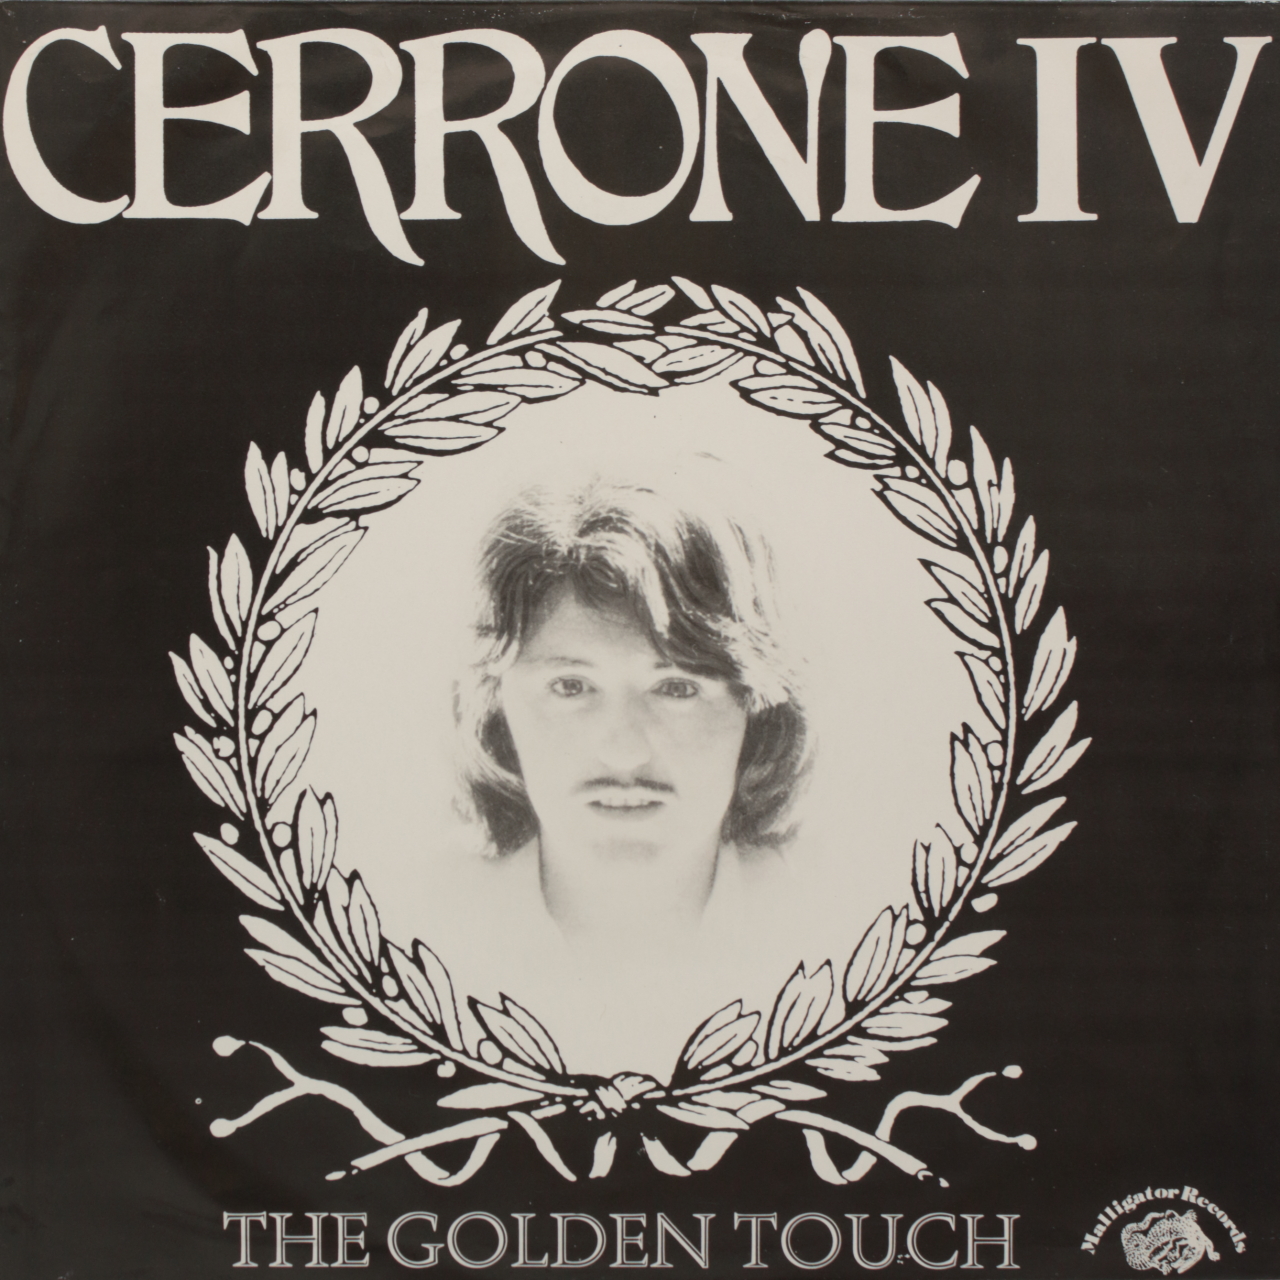 Cerrone IV: The Golden Touch